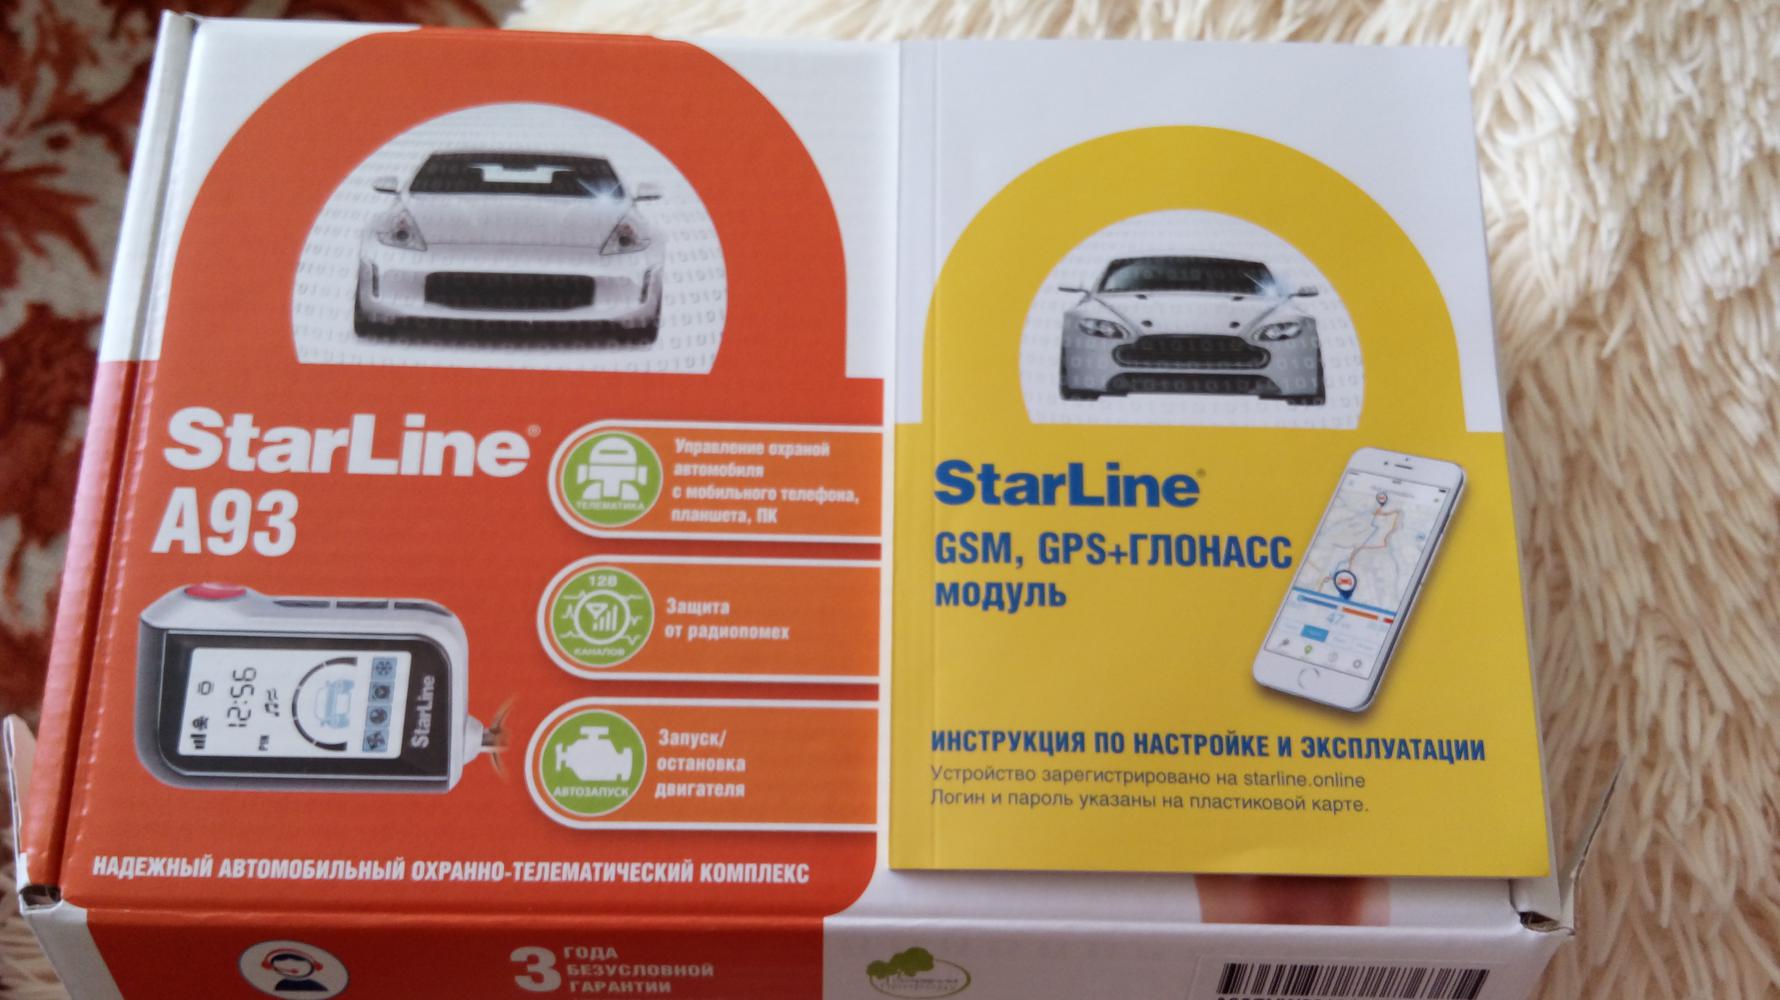 Starline gsm цена. GSM модуль STARLINE a93. Антенна старлайн а93. Модуль GSM STARLINE a63. Антенна GPS для старлайн а93.